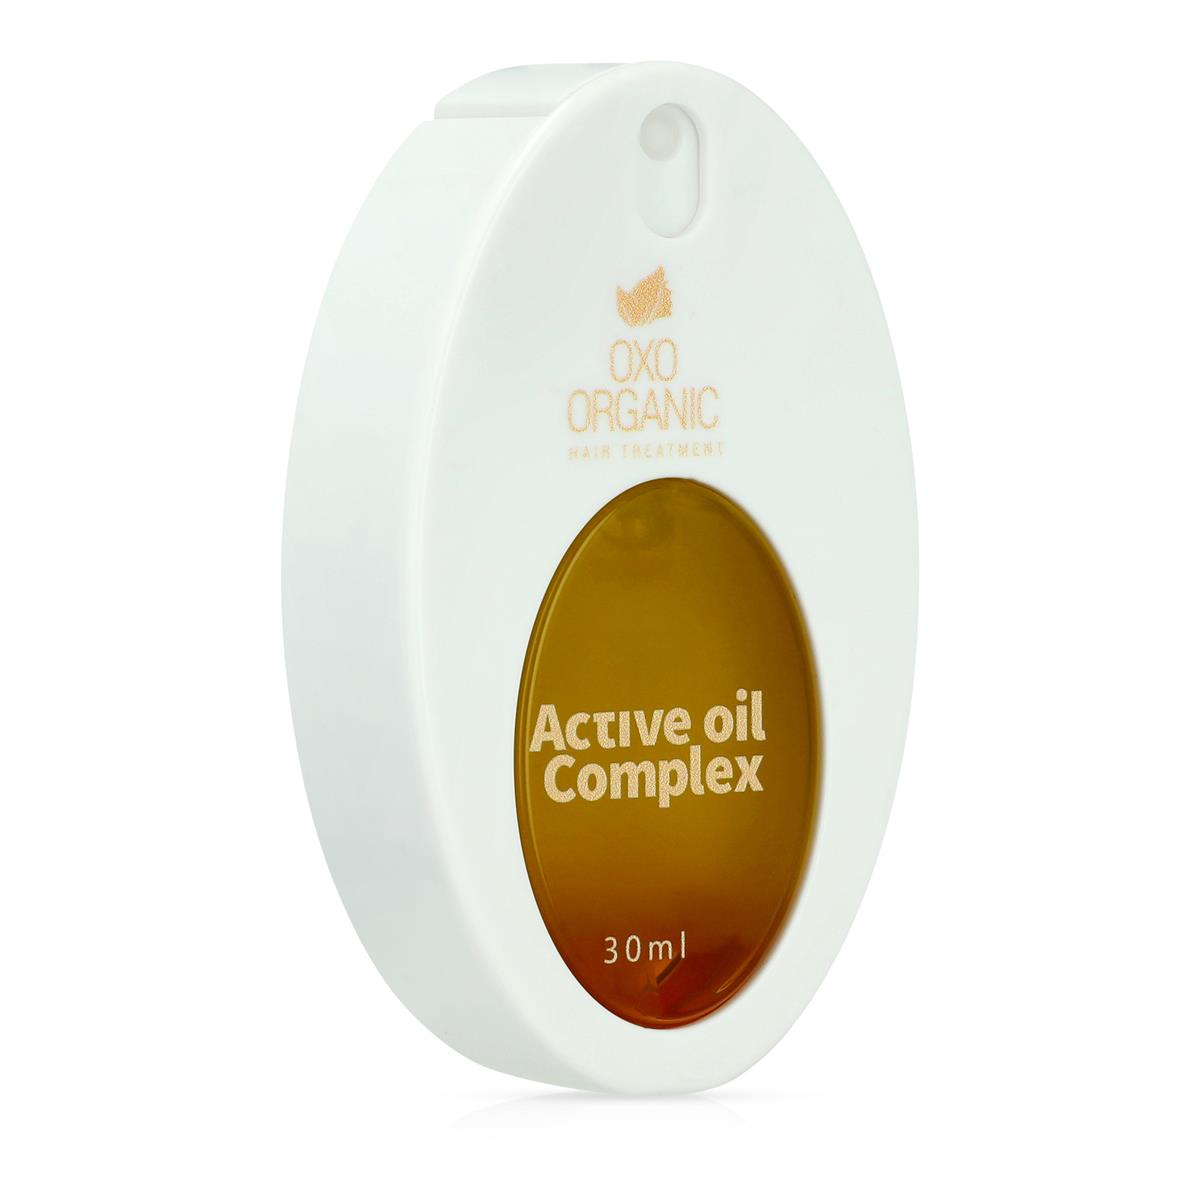 Oxo Hair Repair Oil Ampoule - 30ml - Oxo Organic